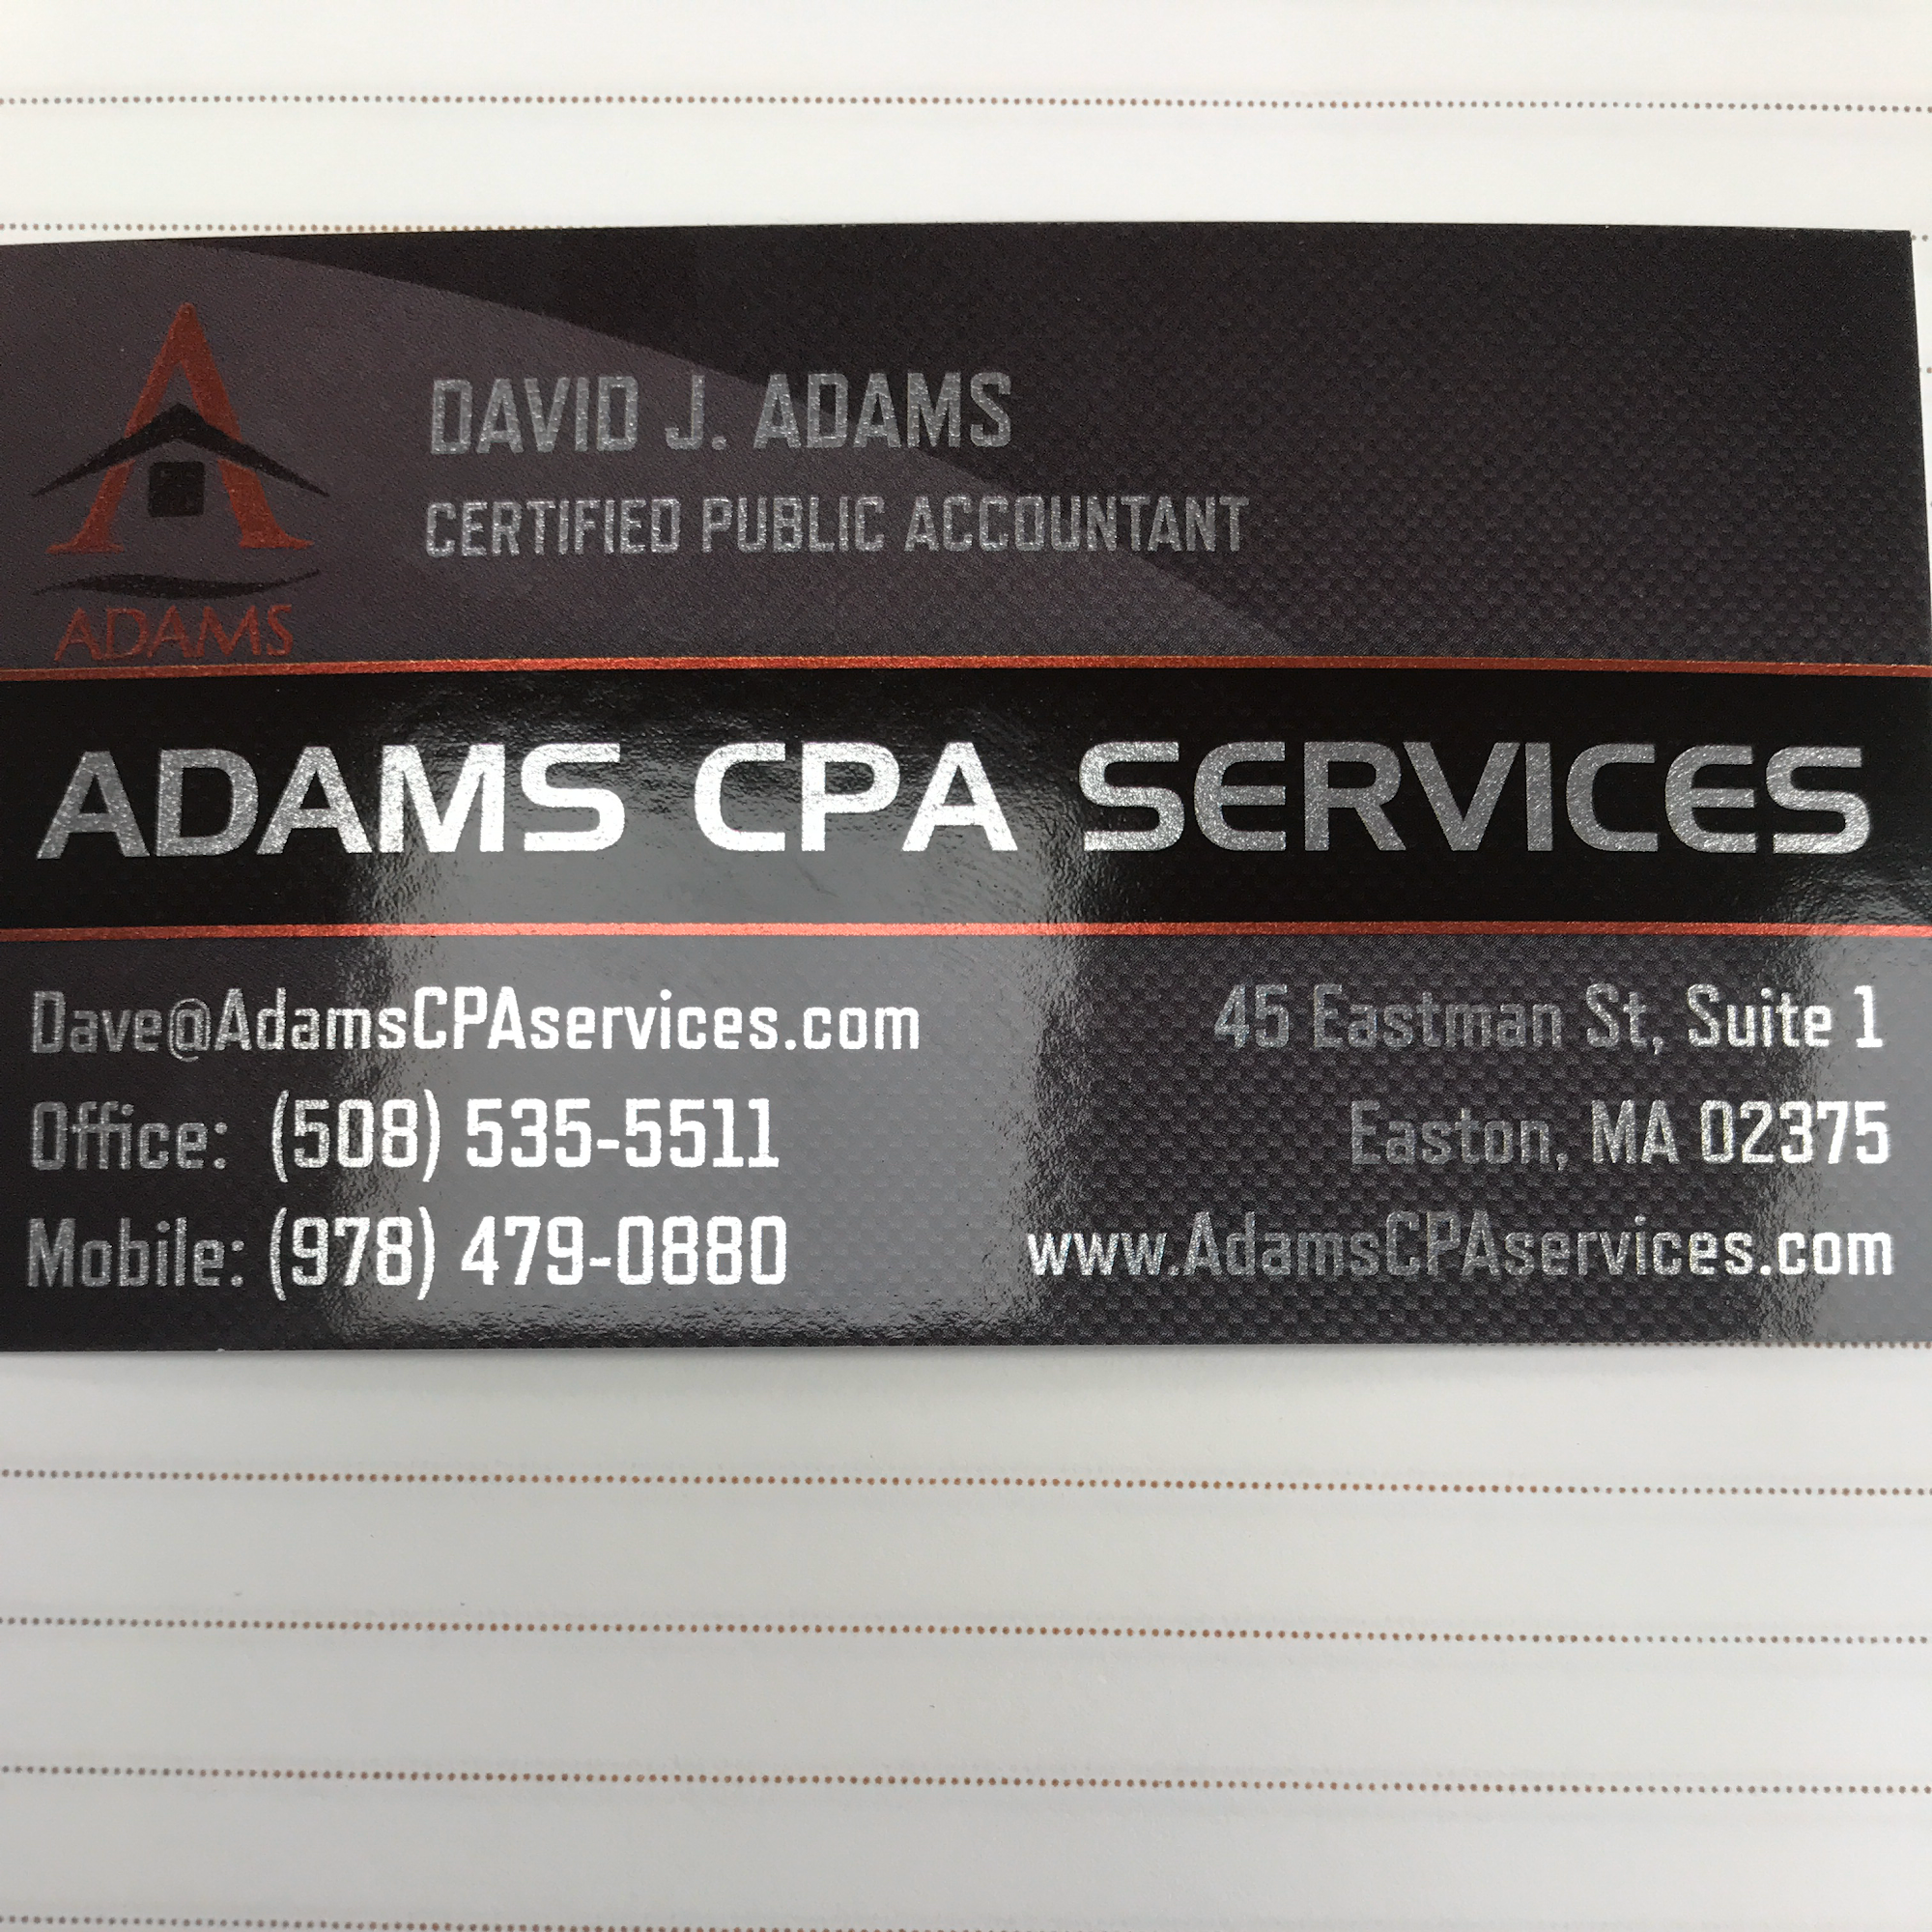 Adams CPA Services 45 Eastman St Suite 1, South Easton Massachusetts 02375